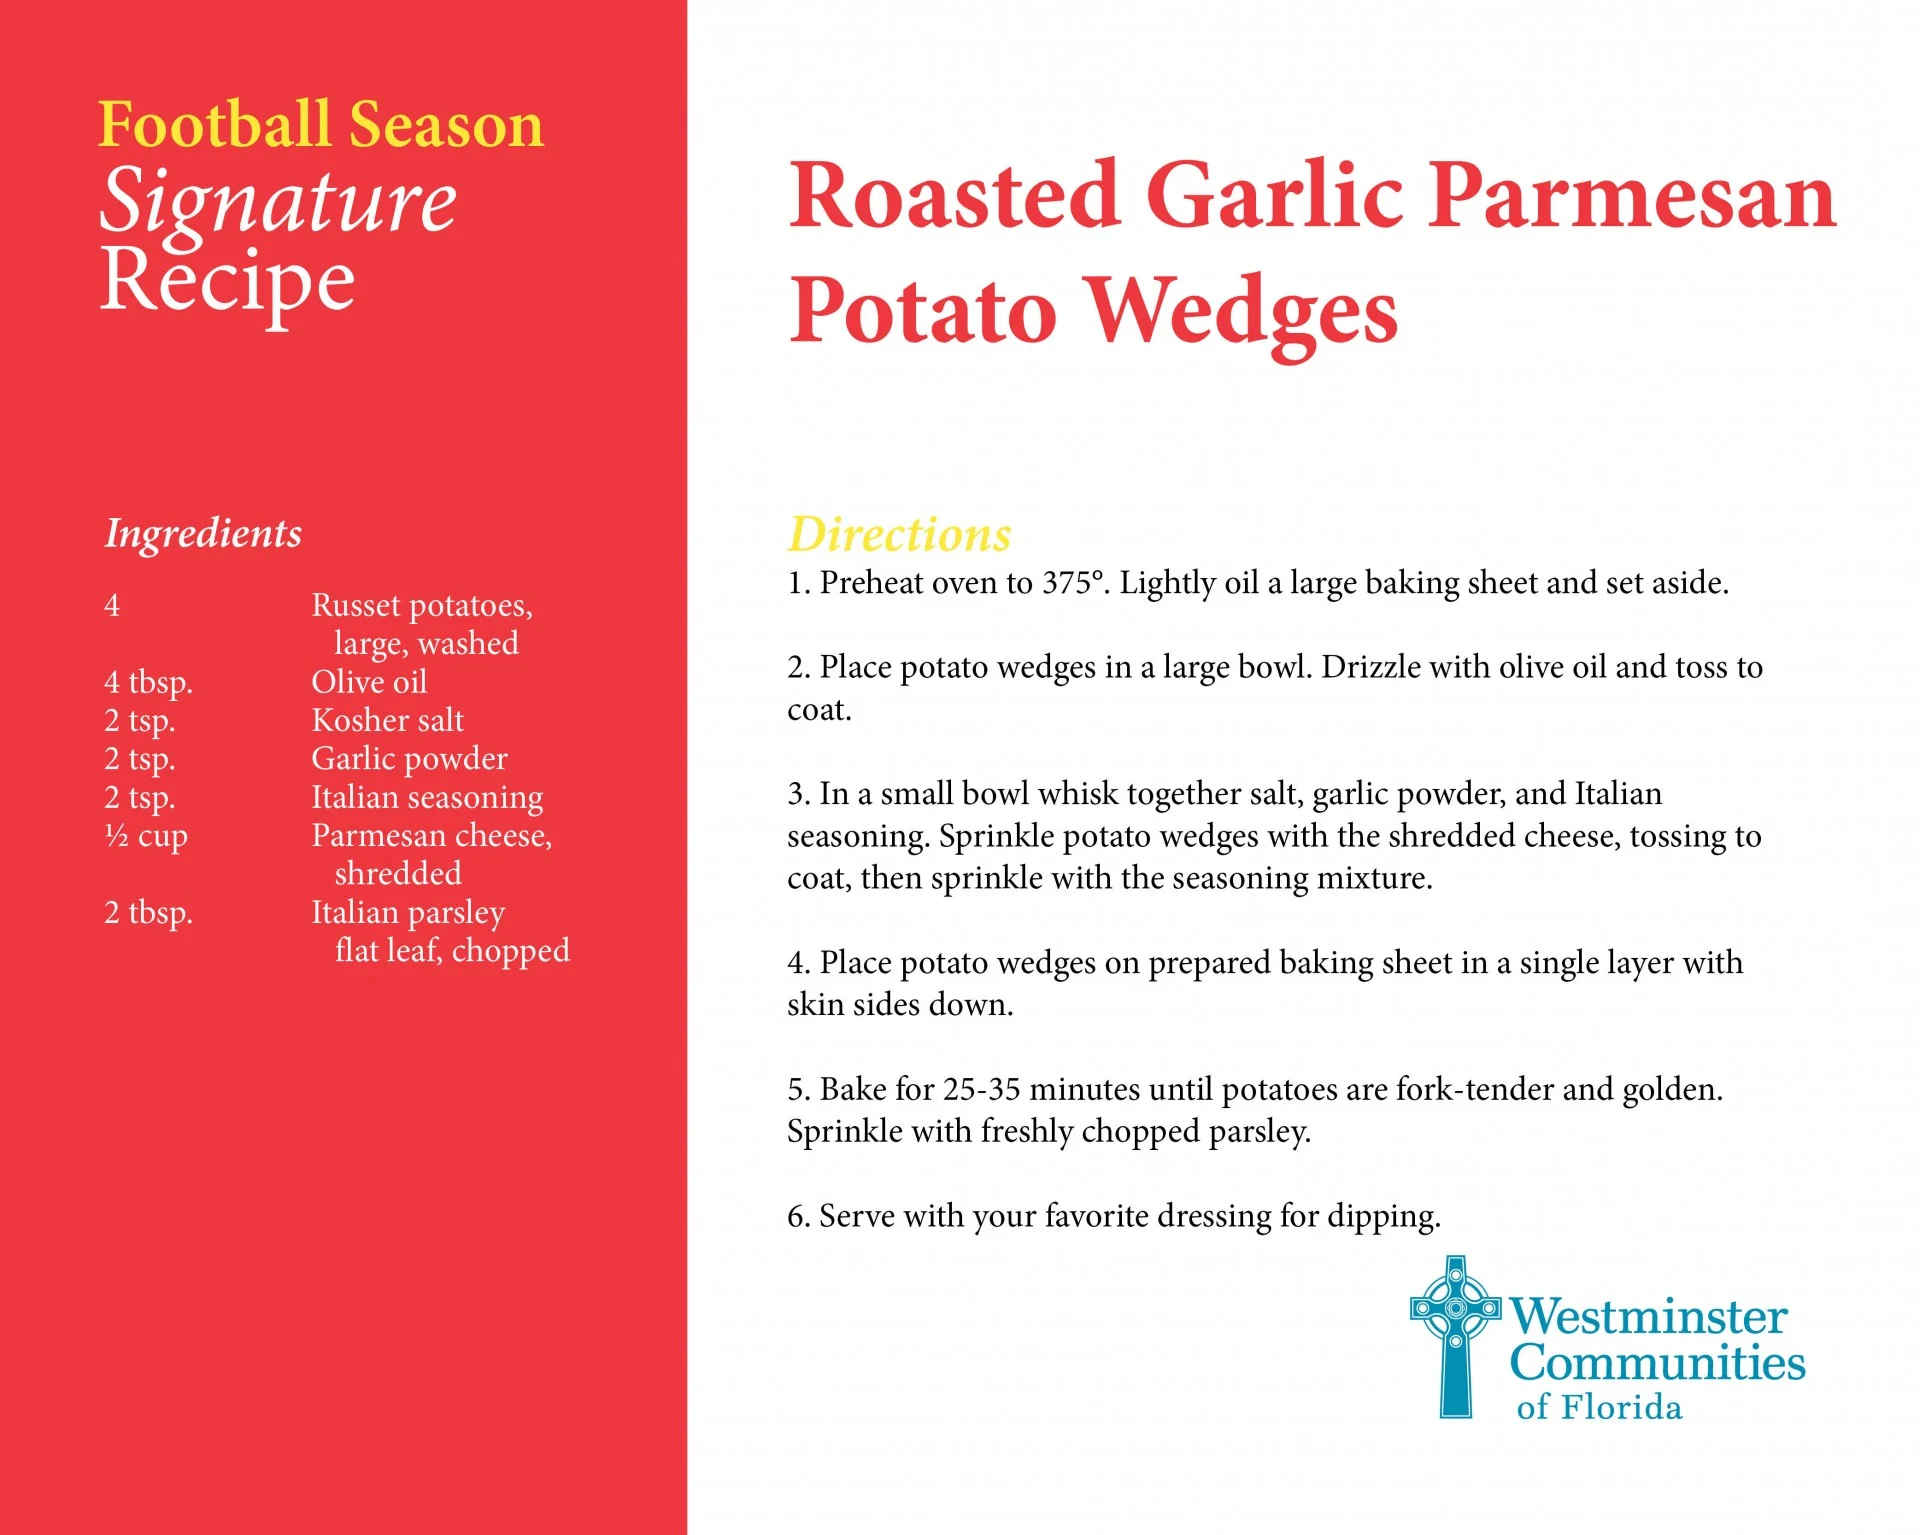 Our Signature Roasted Garlic Parmesan Potato Wedges